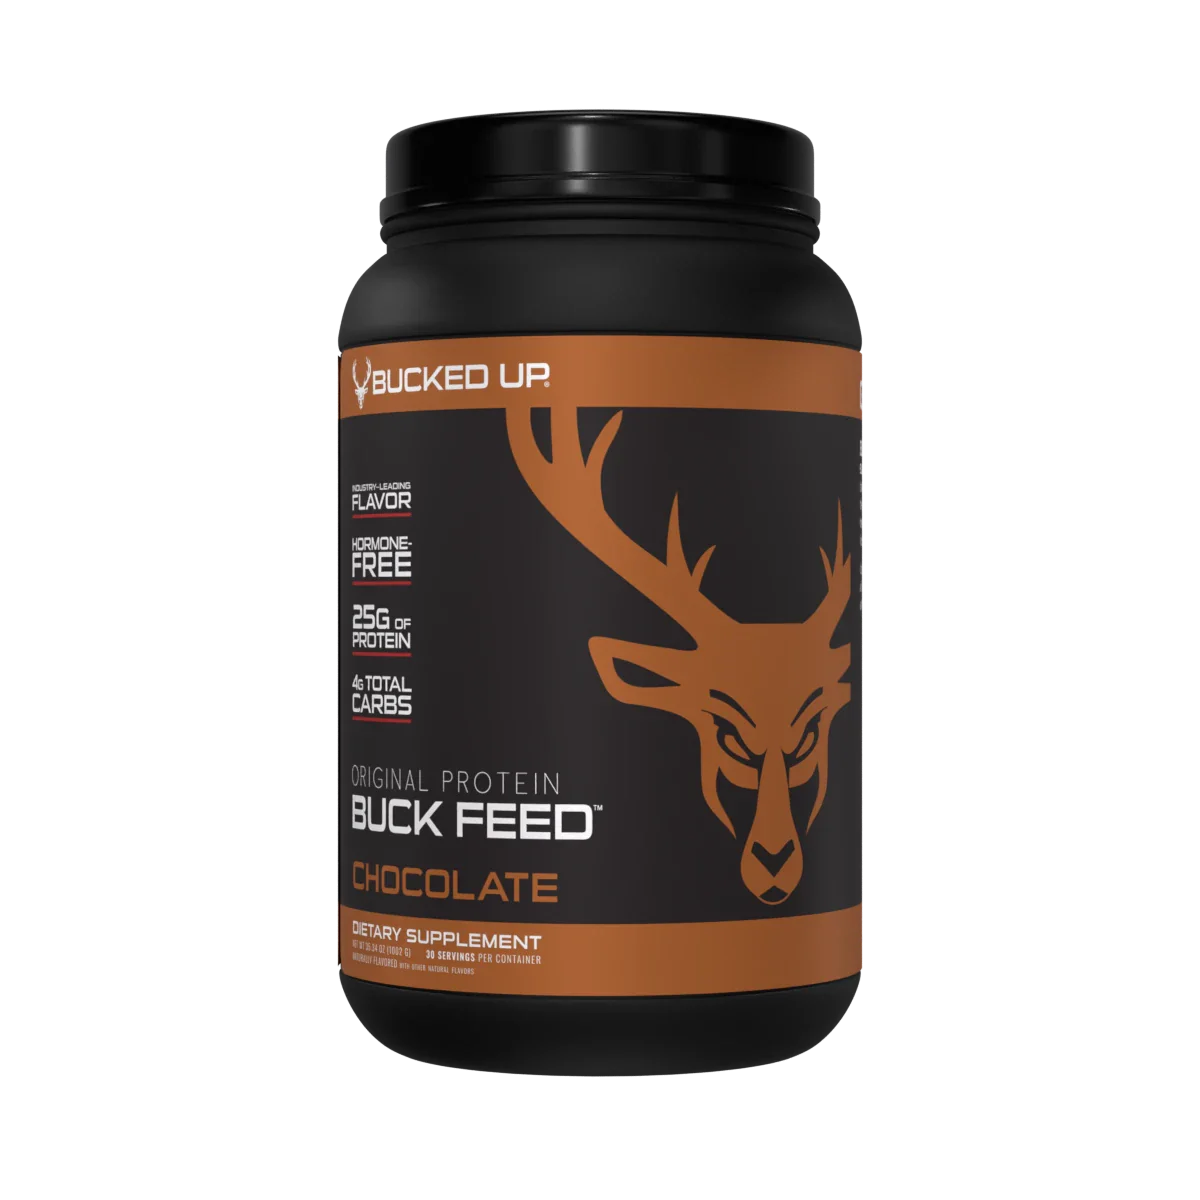 Bucked UP | Buck Feed Original | Protein